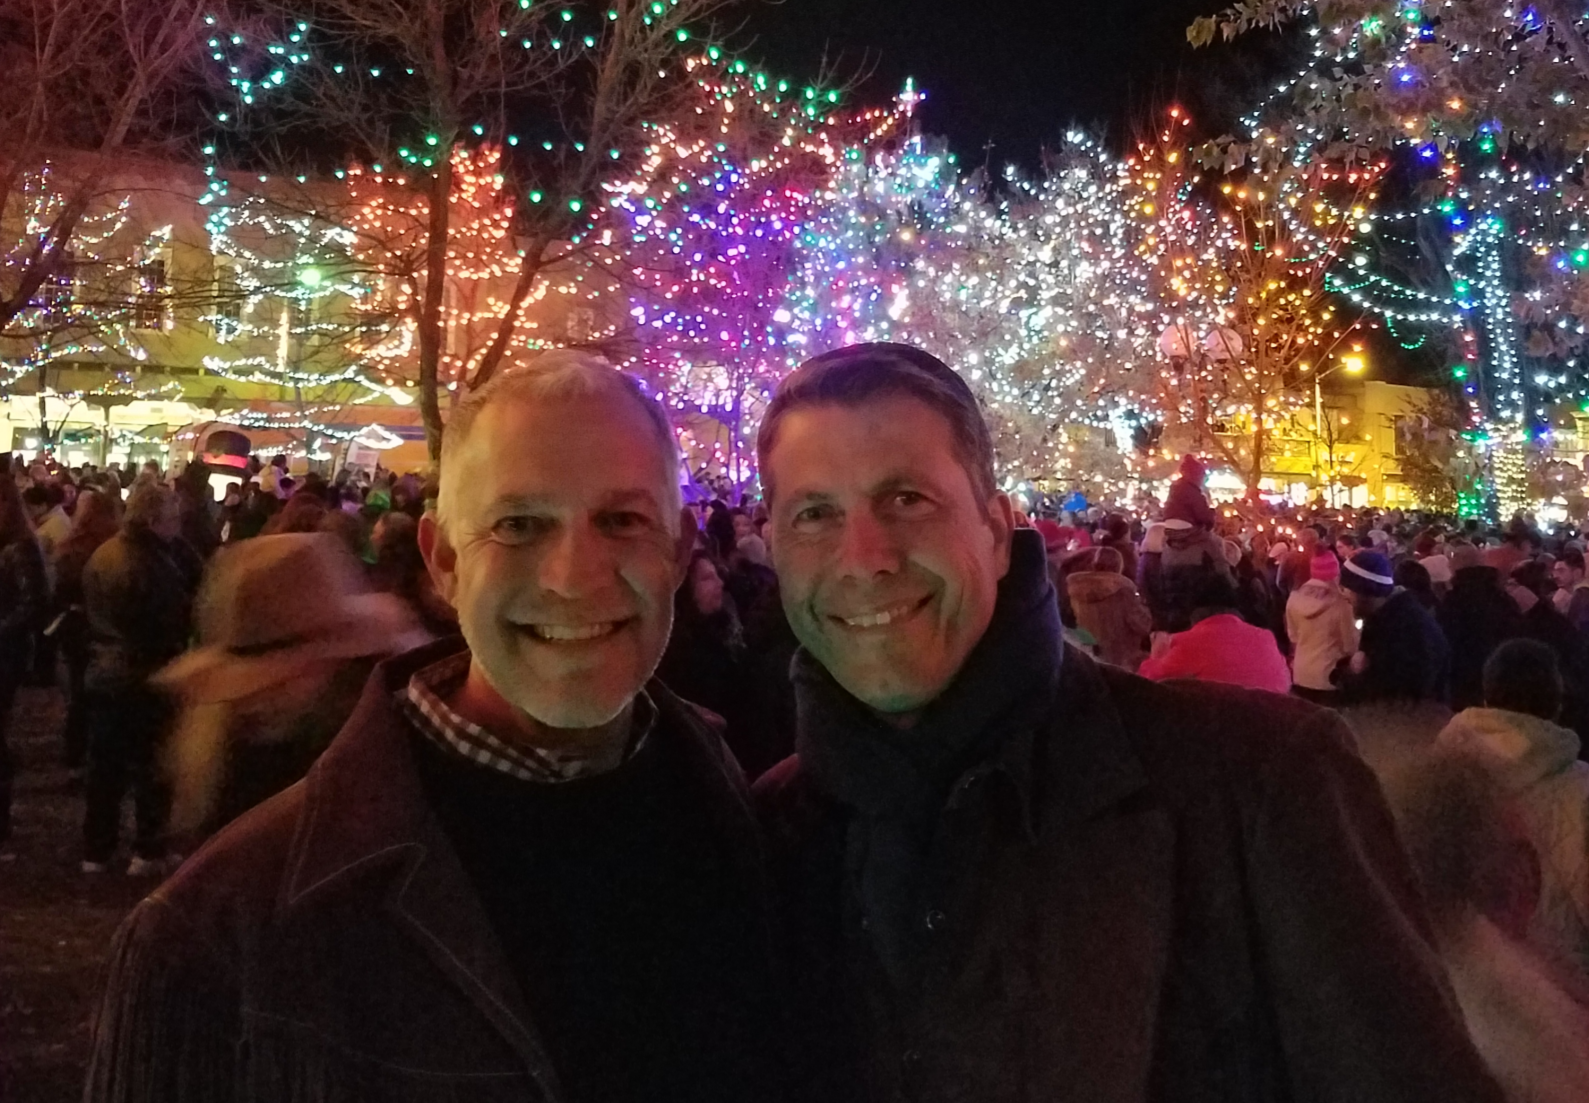 Gay men purchase real estate in Santa Fe for retirement